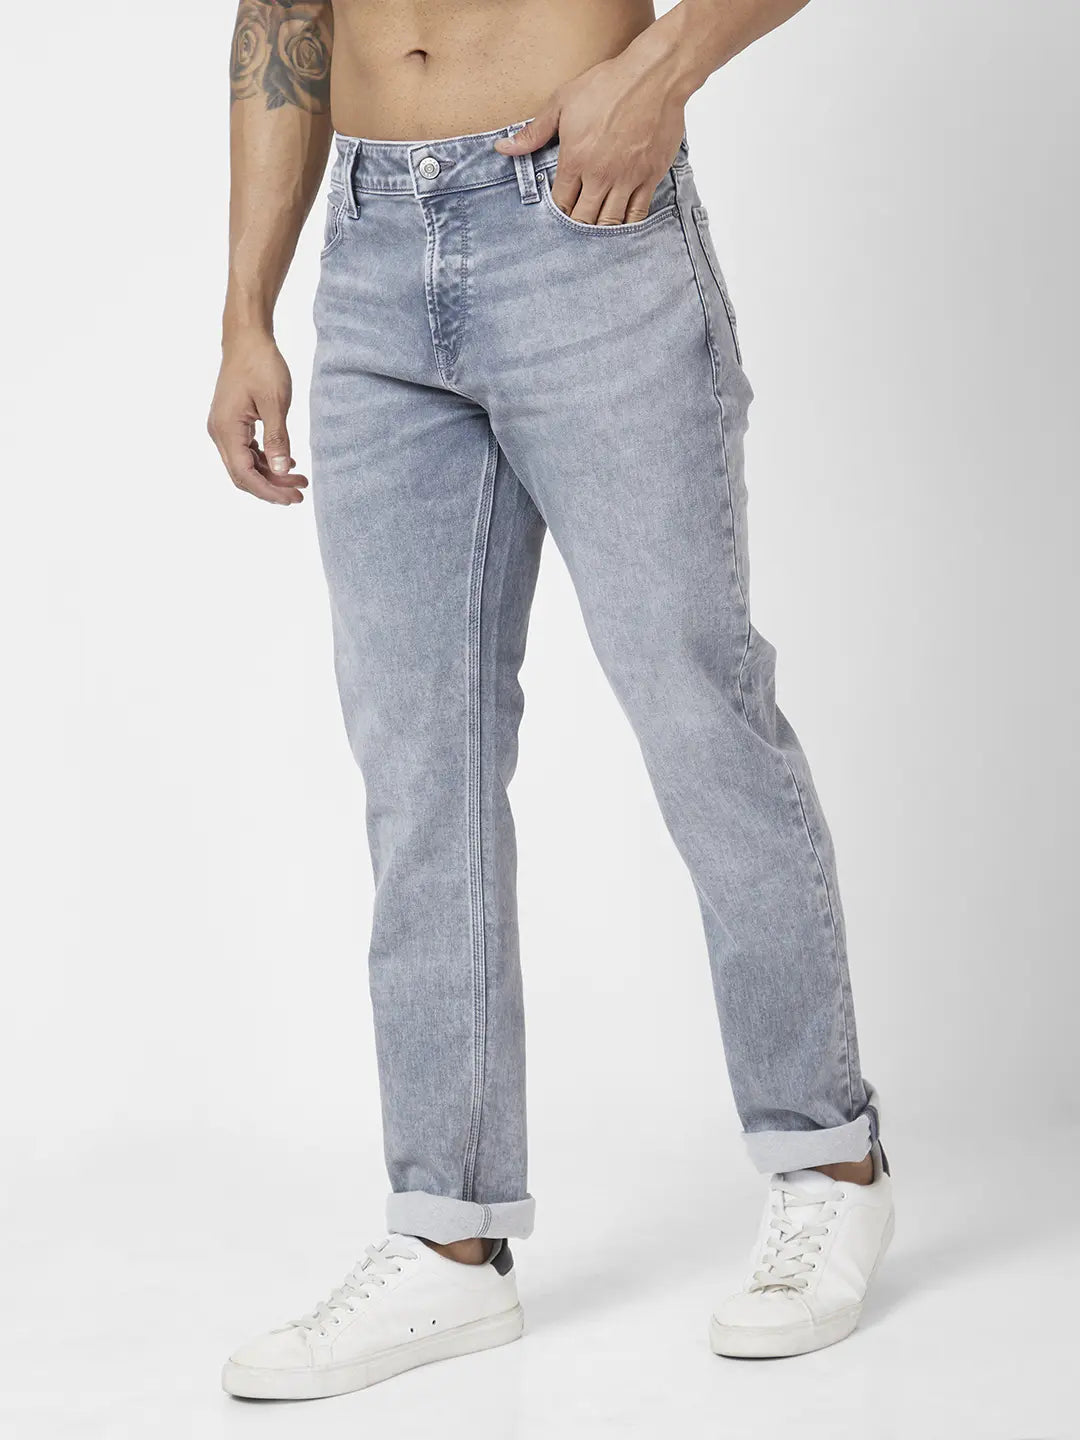 Spykar Men Light Grey Cotton Stretch Comfort Fit Straigth Length Clean look Mid Rise Jeans (Ricardo)